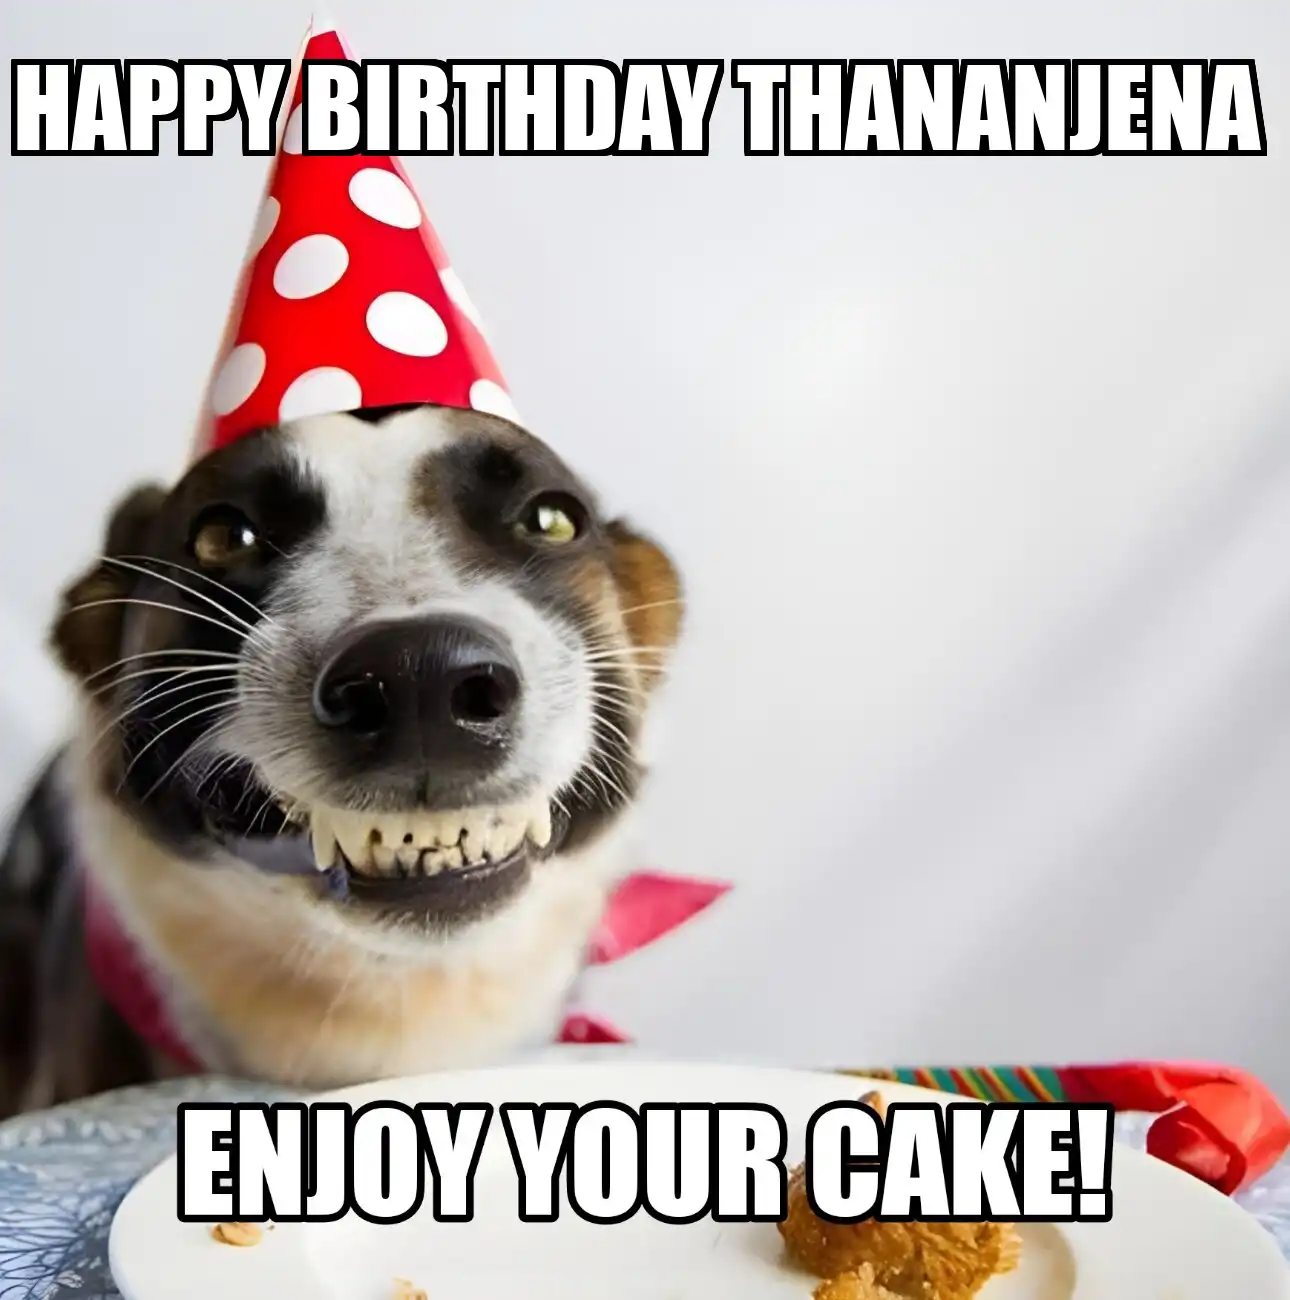 Happy Birthday Thananjena Enjoy Your Cake Dog Meme